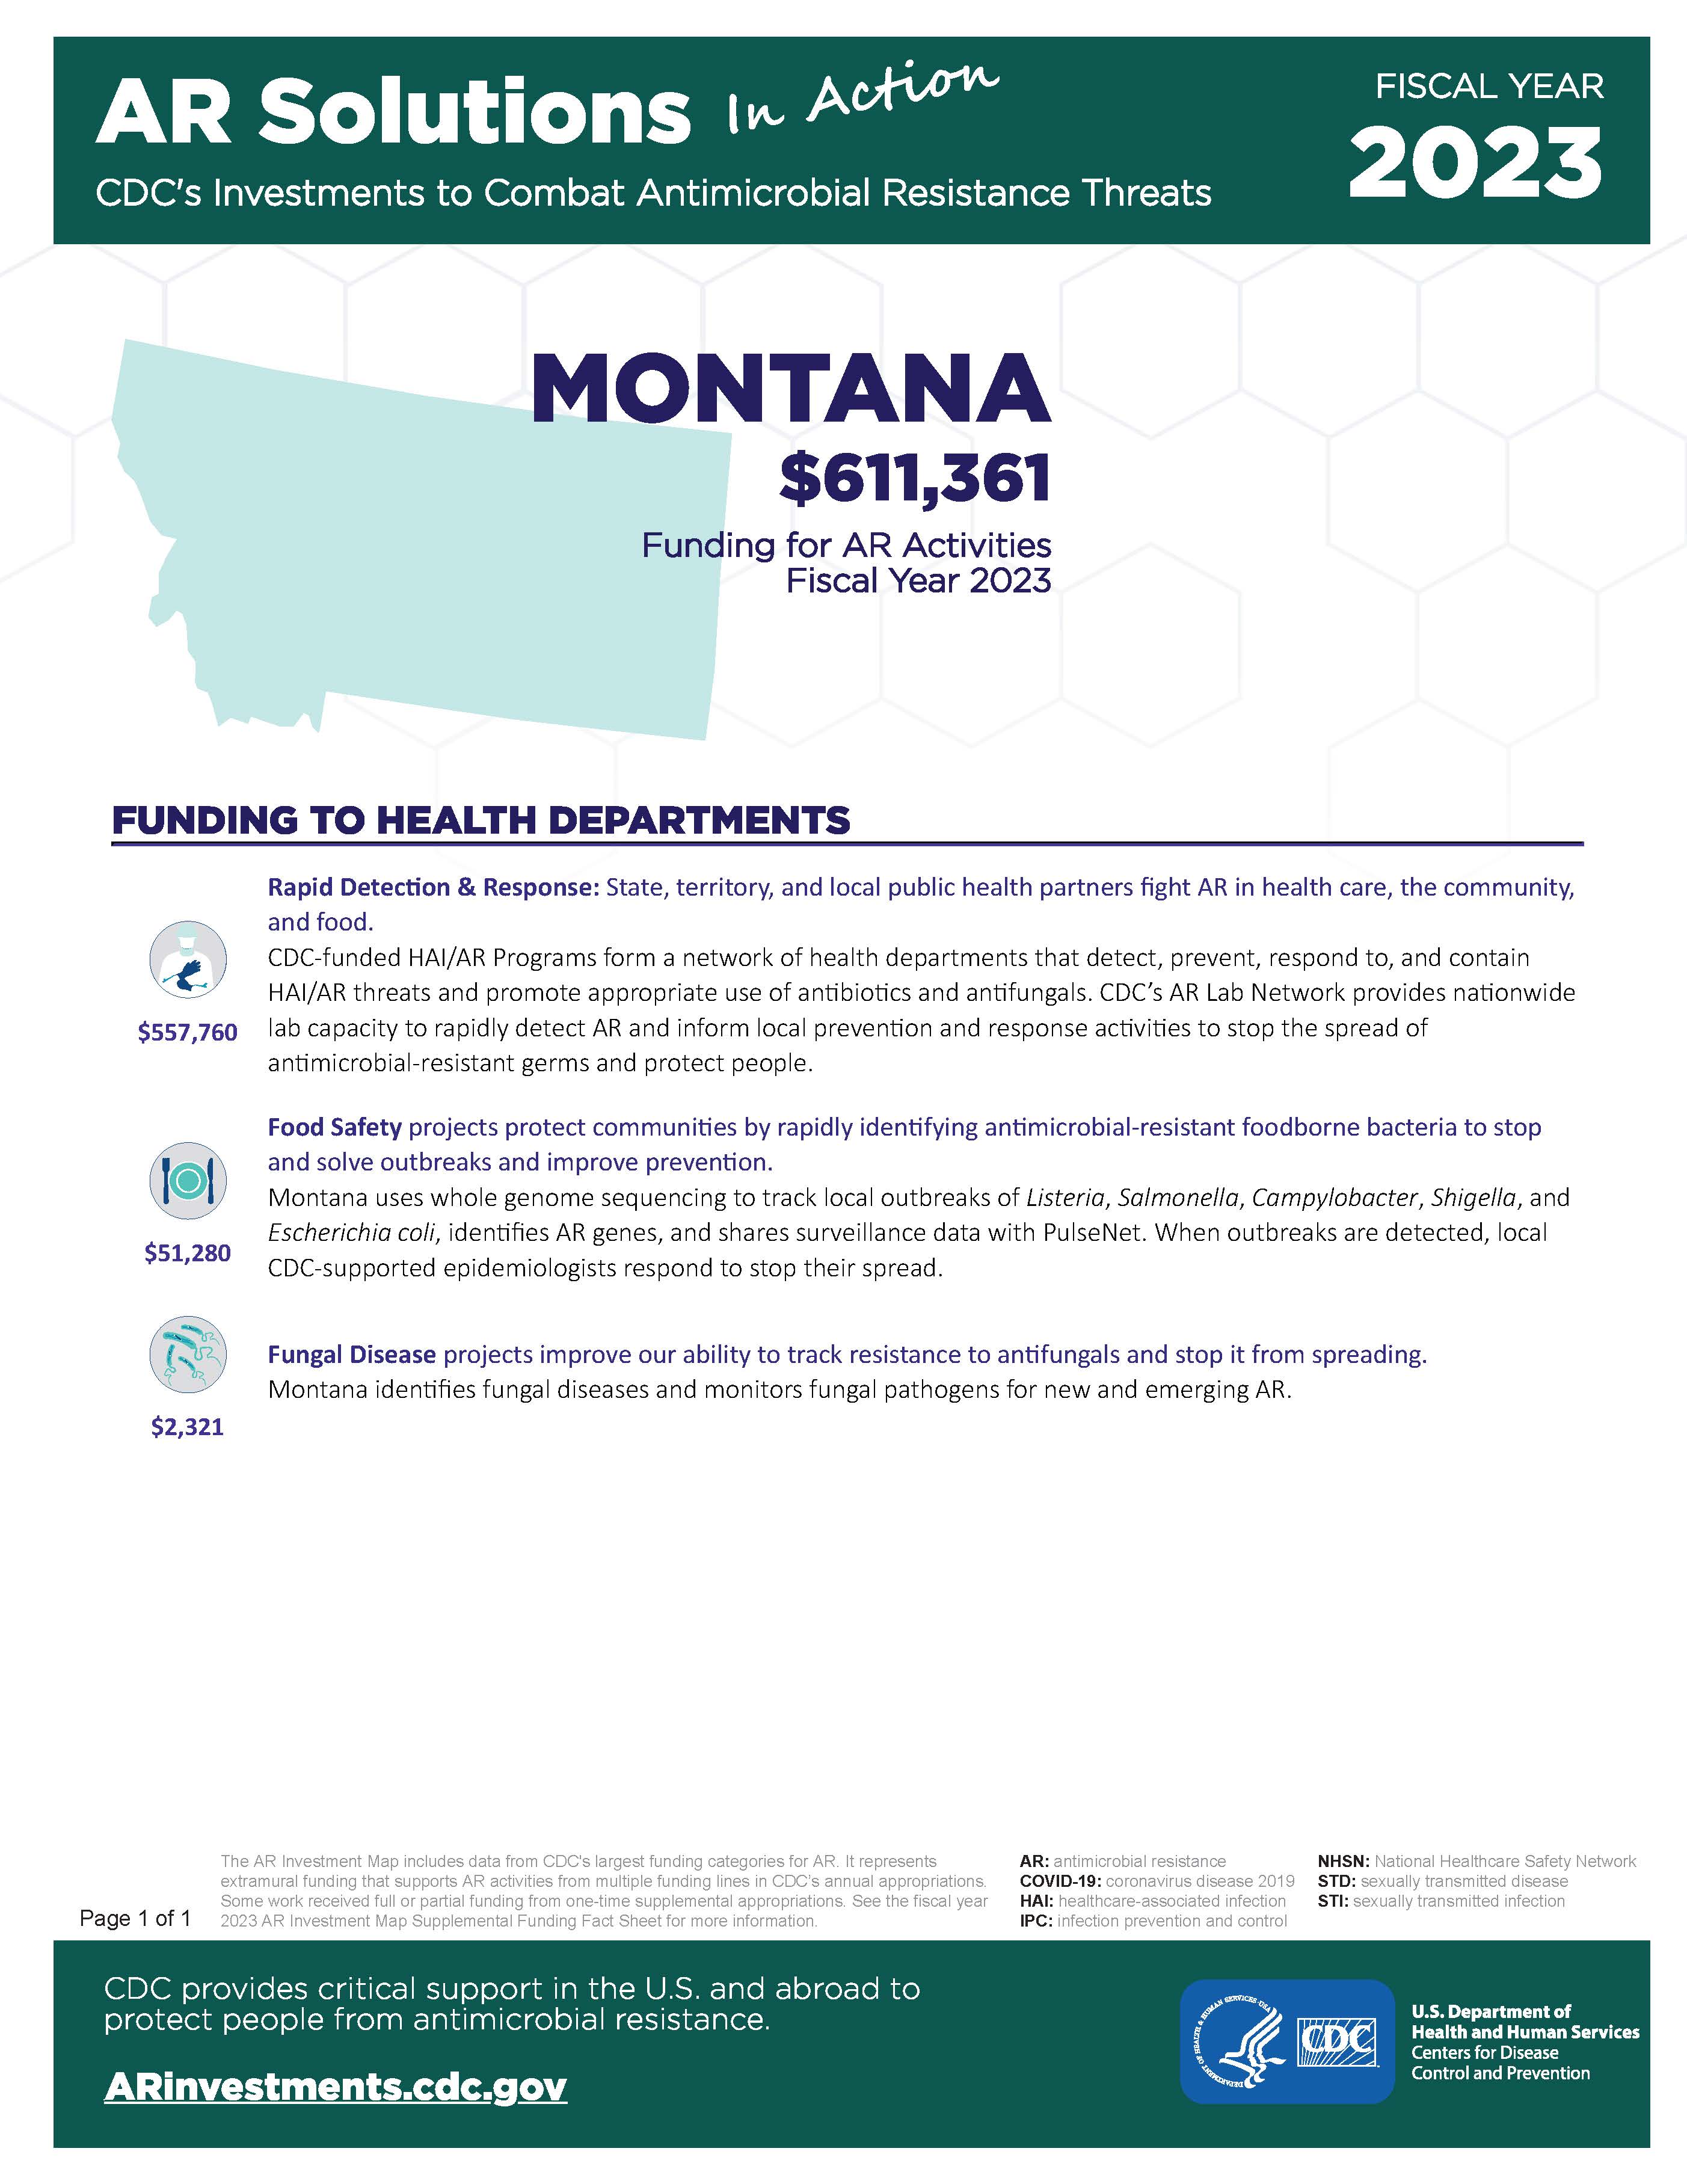 View Factsheet for Montana